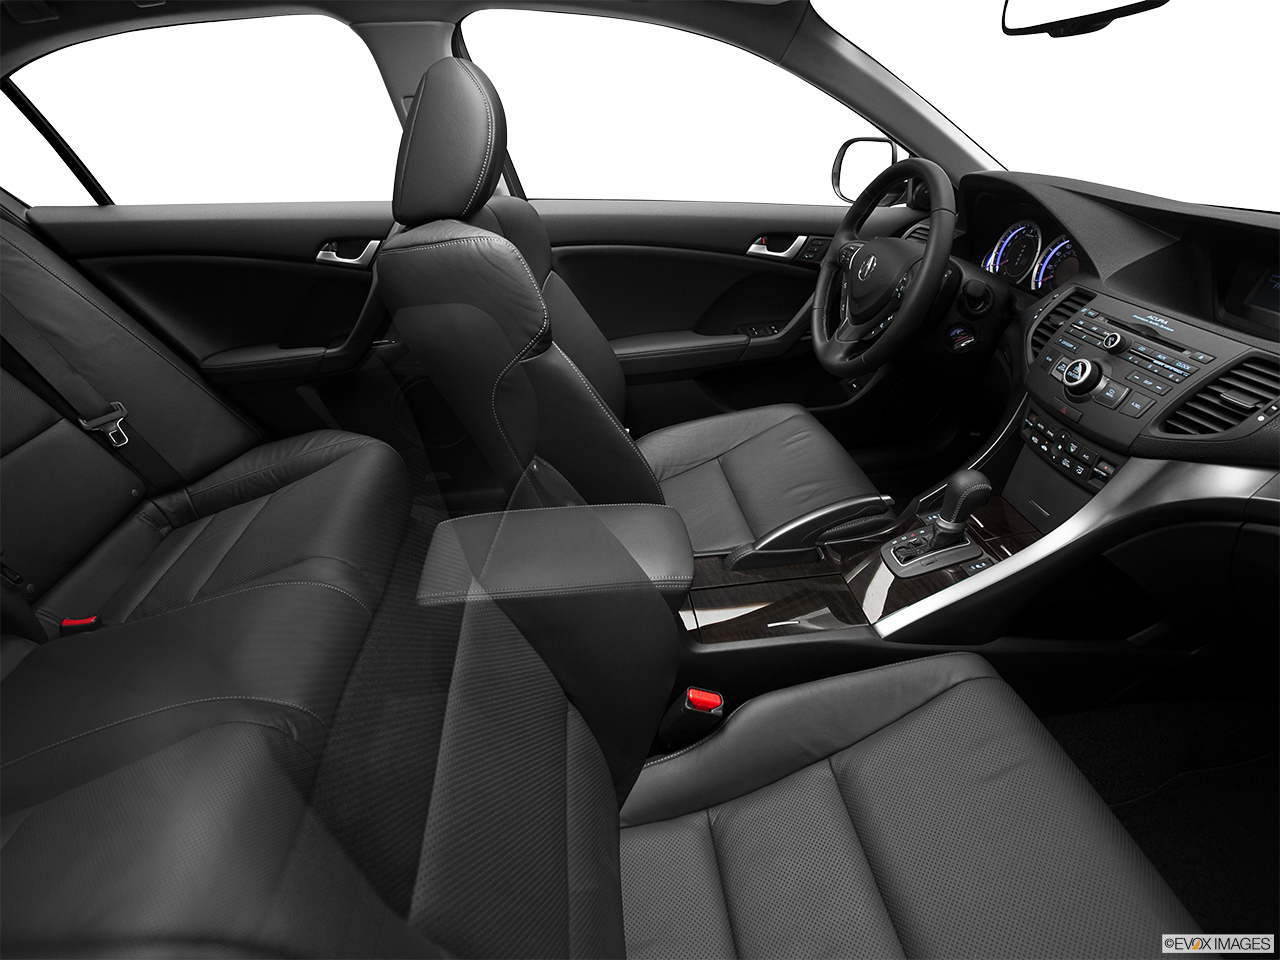 2011 Acura TSX TSX 5-speed Automatic Fake Buck Shot - Interior from Passenger B pillar. 